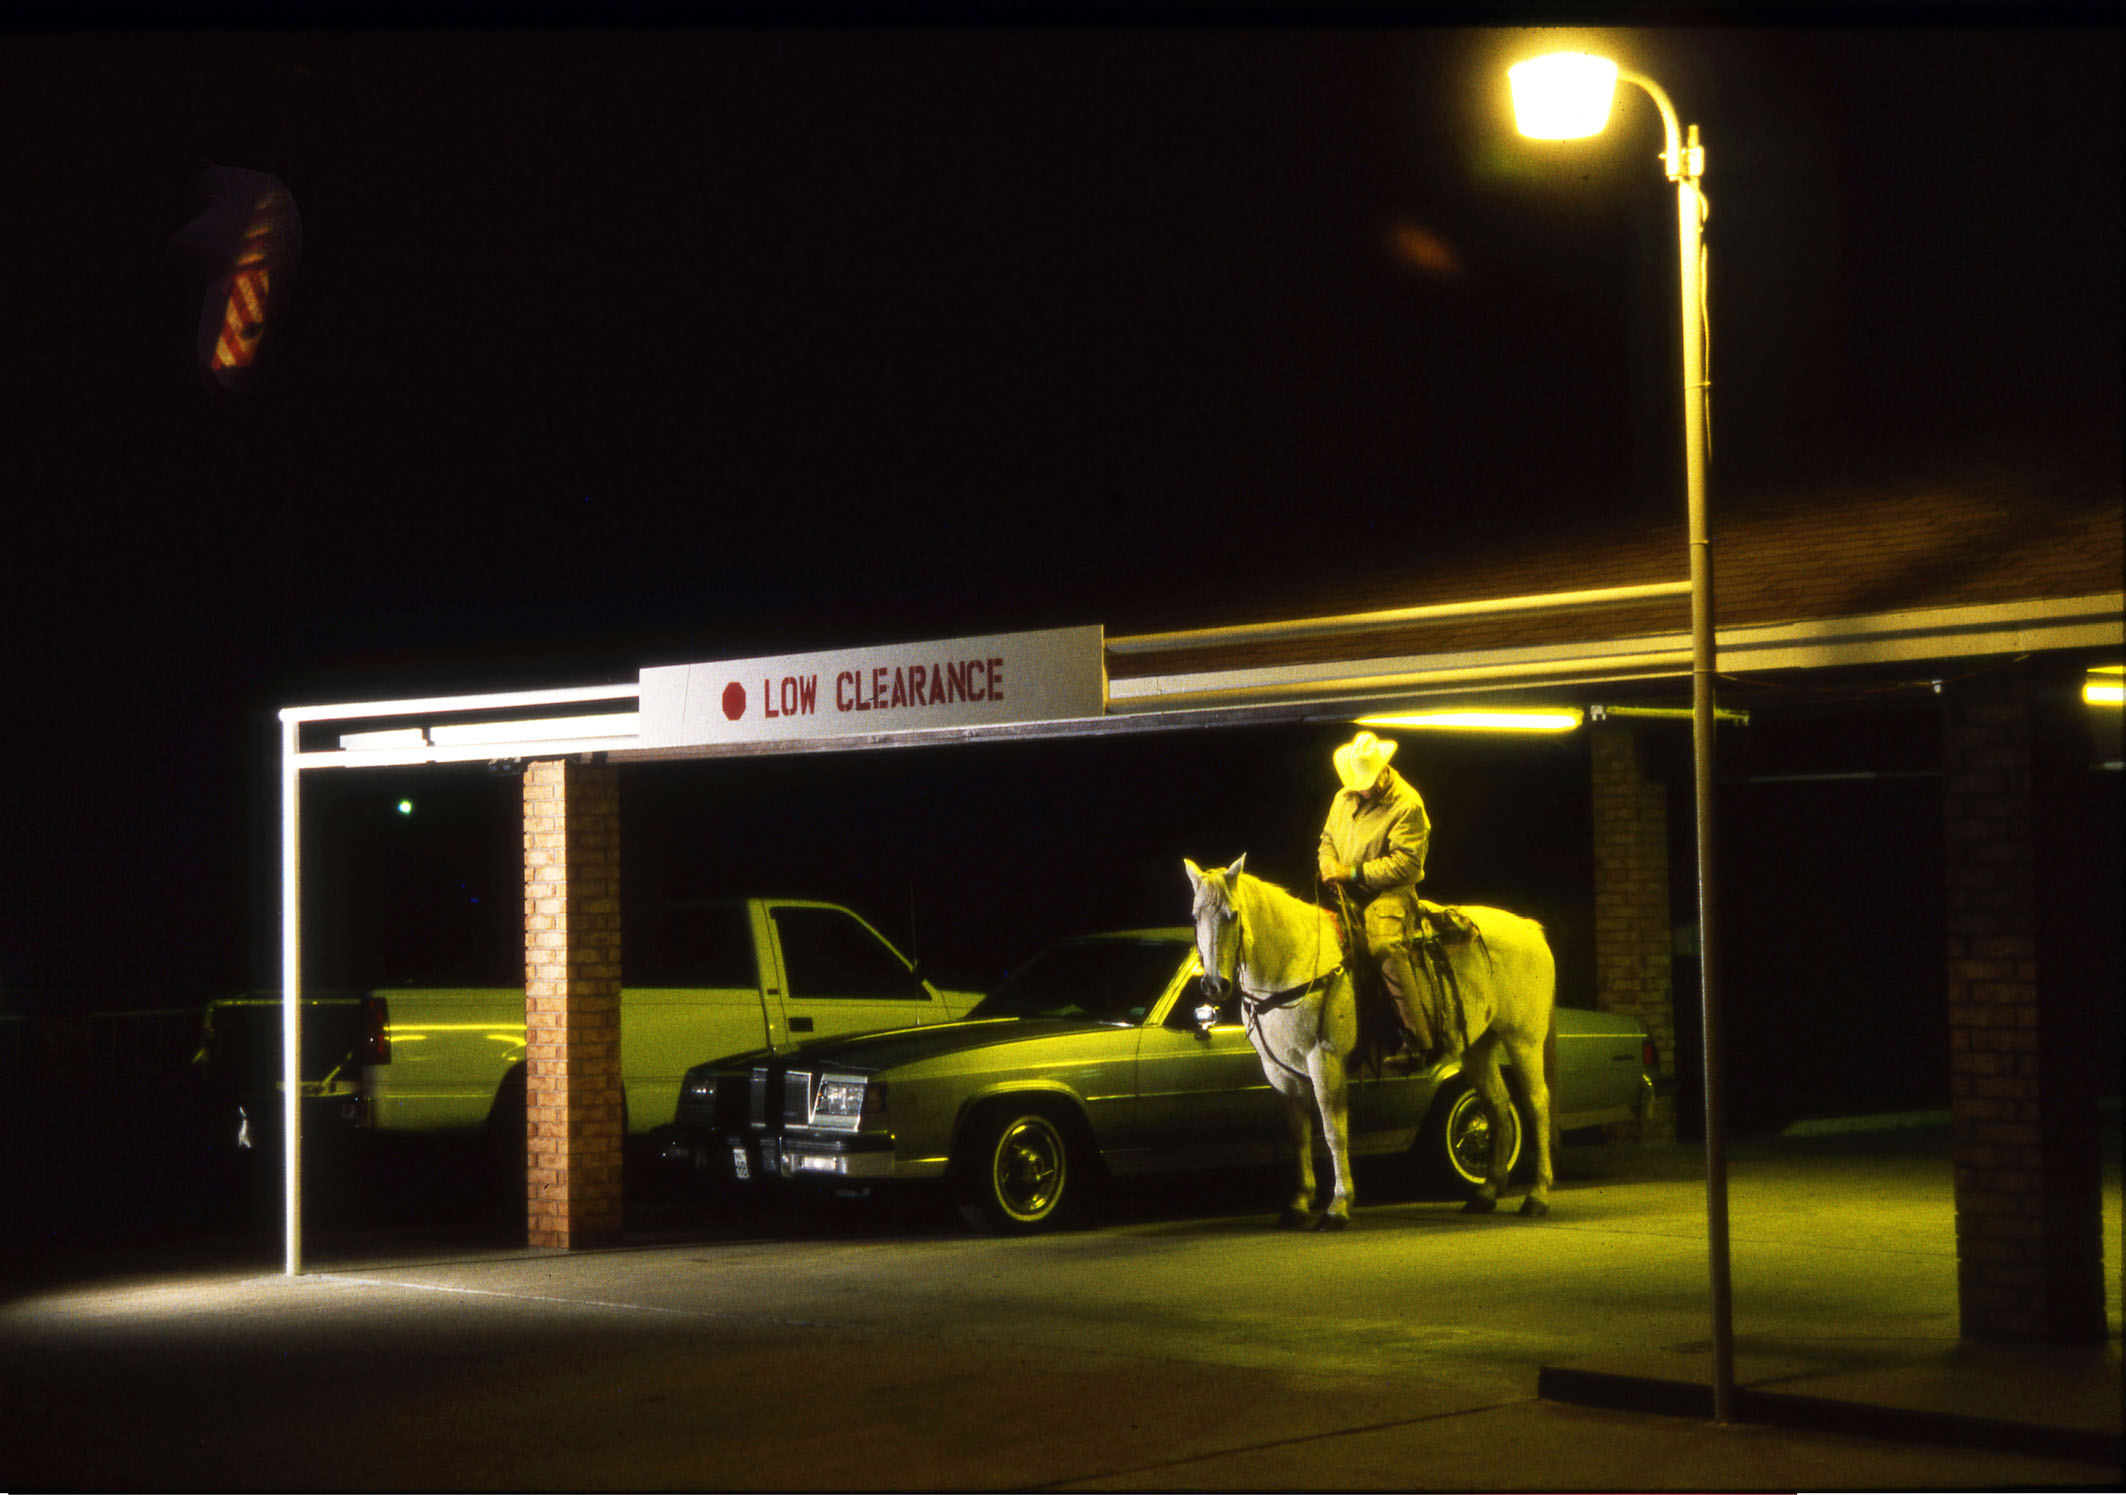 DieterBlum_LowClearance1 Texas 1992